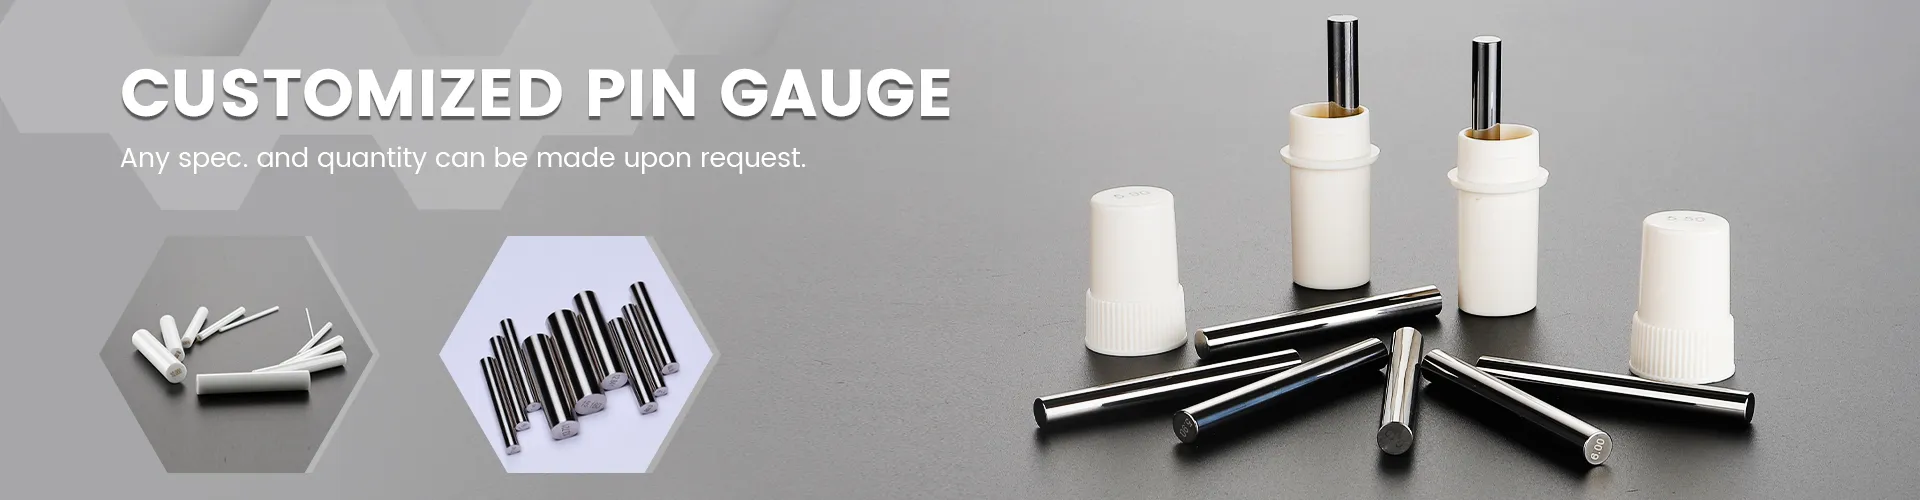 Customized Pin Gauge